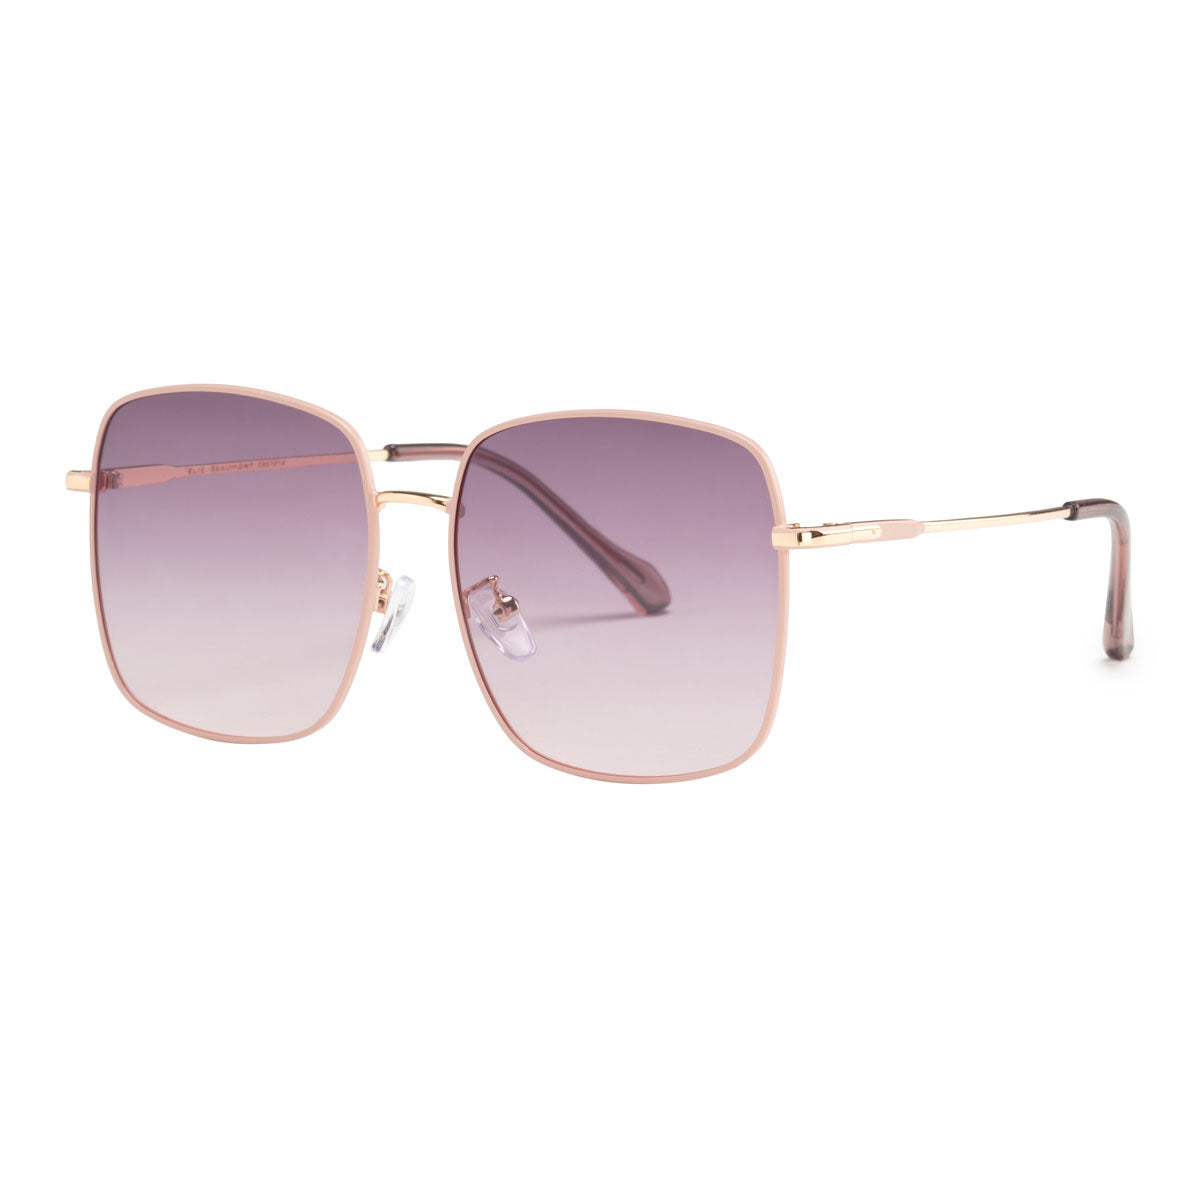 Sunglasses - EBS7014 Capri